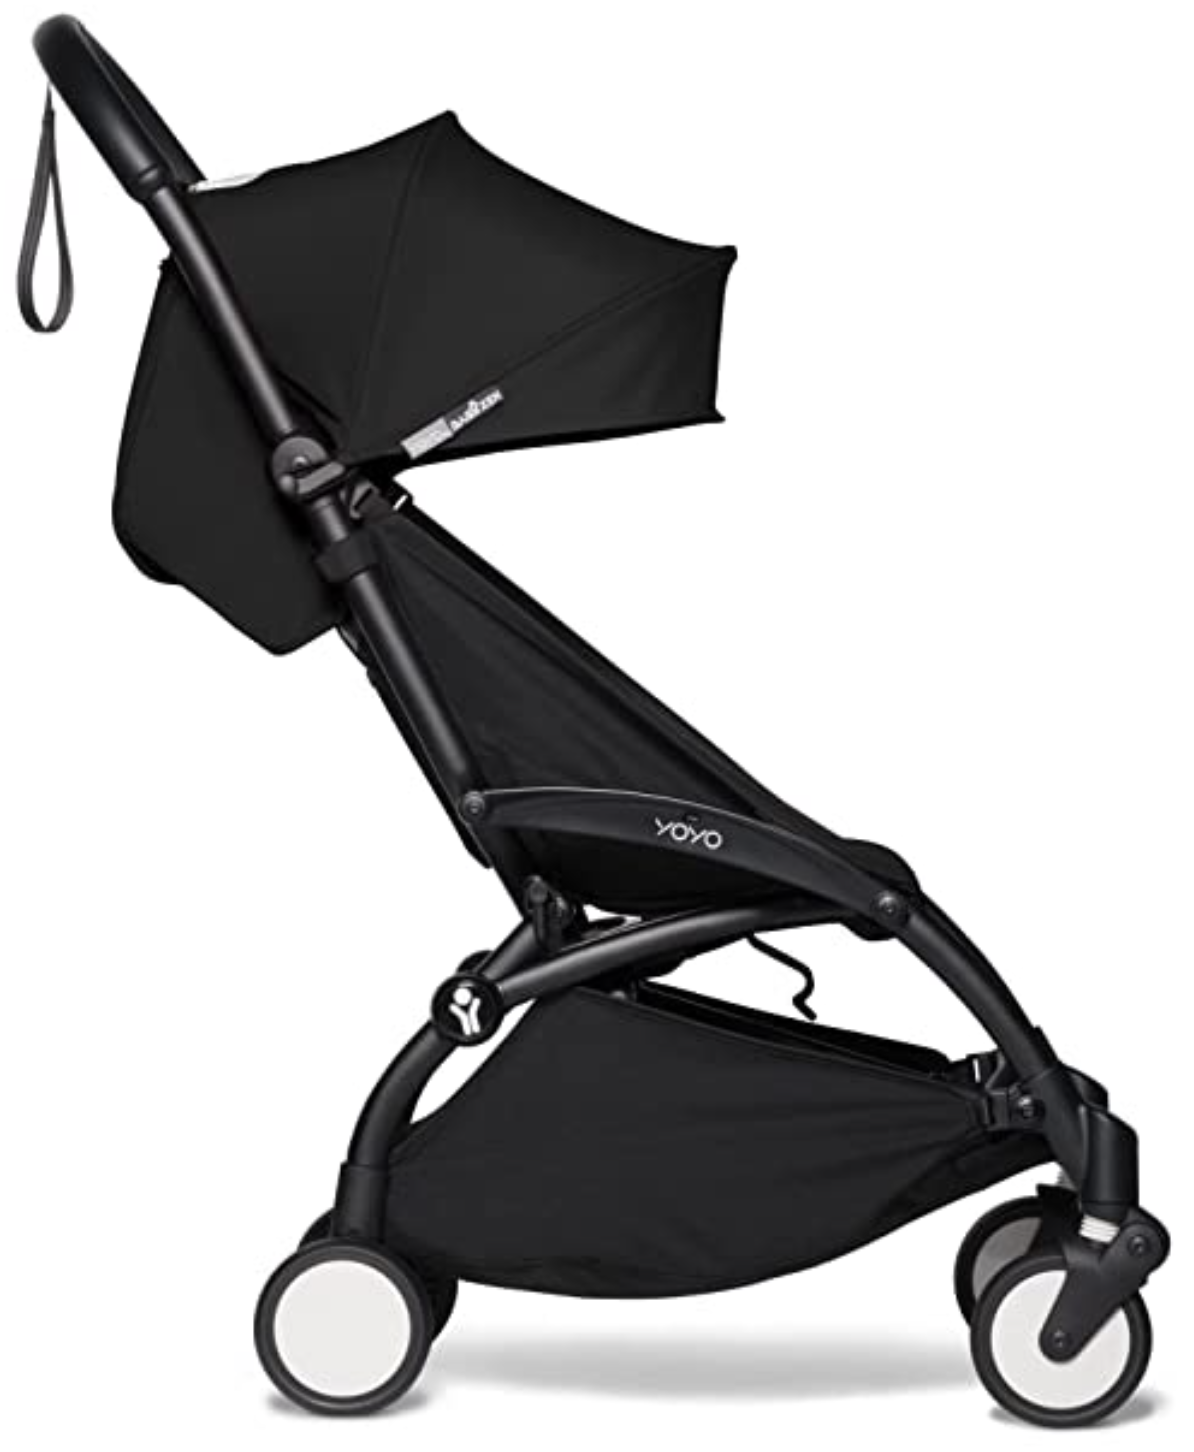 YoYo black stroller for traveling